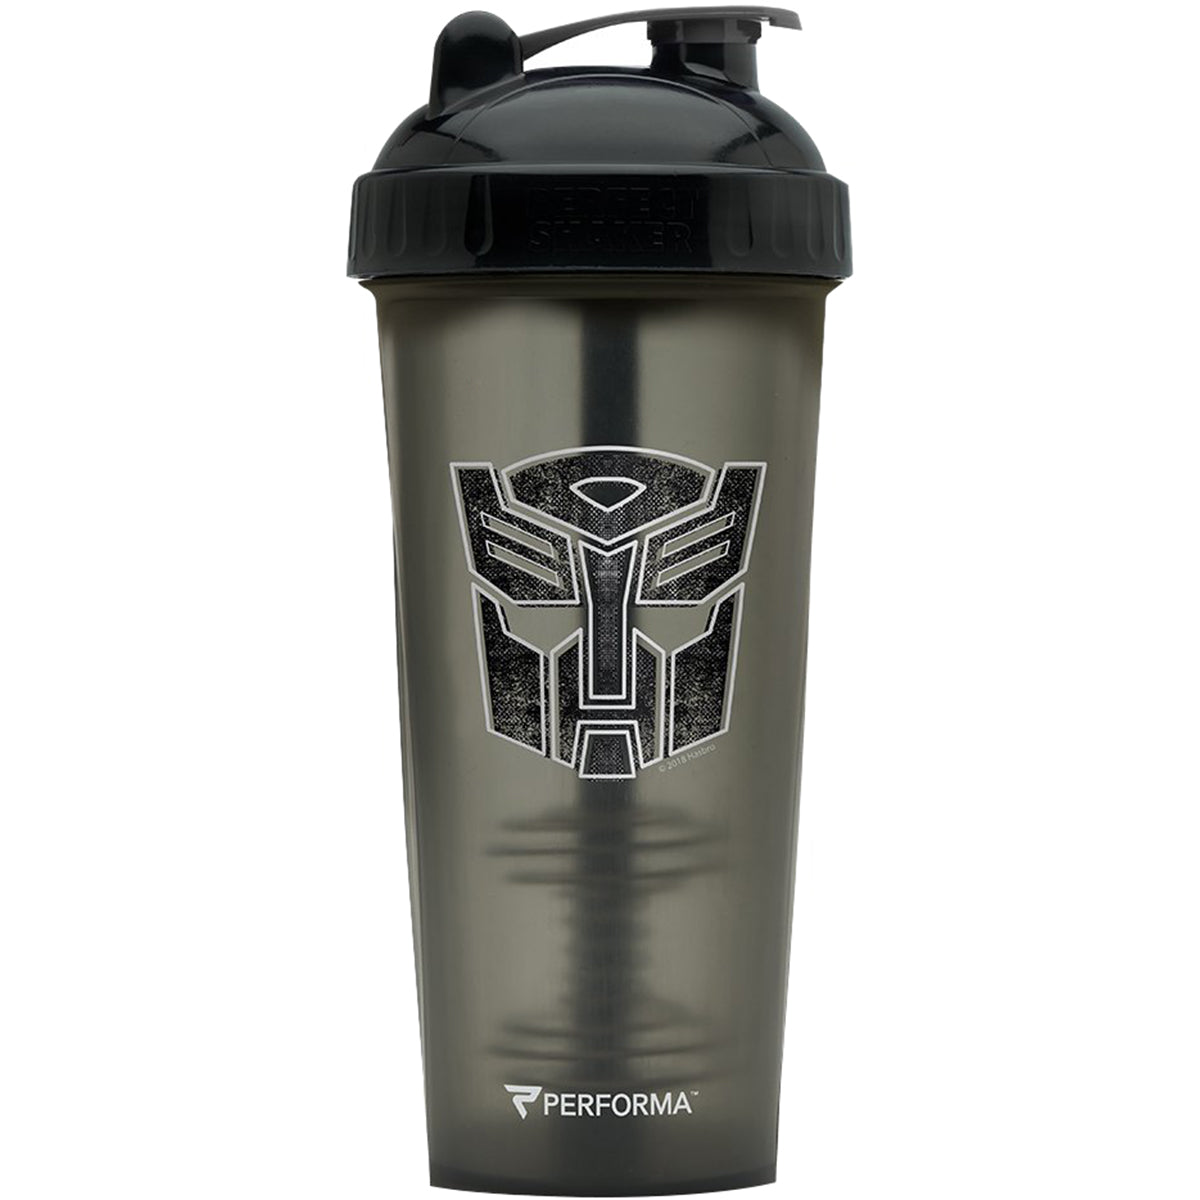 Performa PerfectShaker 28 oz. Transformers Shaker Cup Bottle - Aquabot - Black PerfectShaker